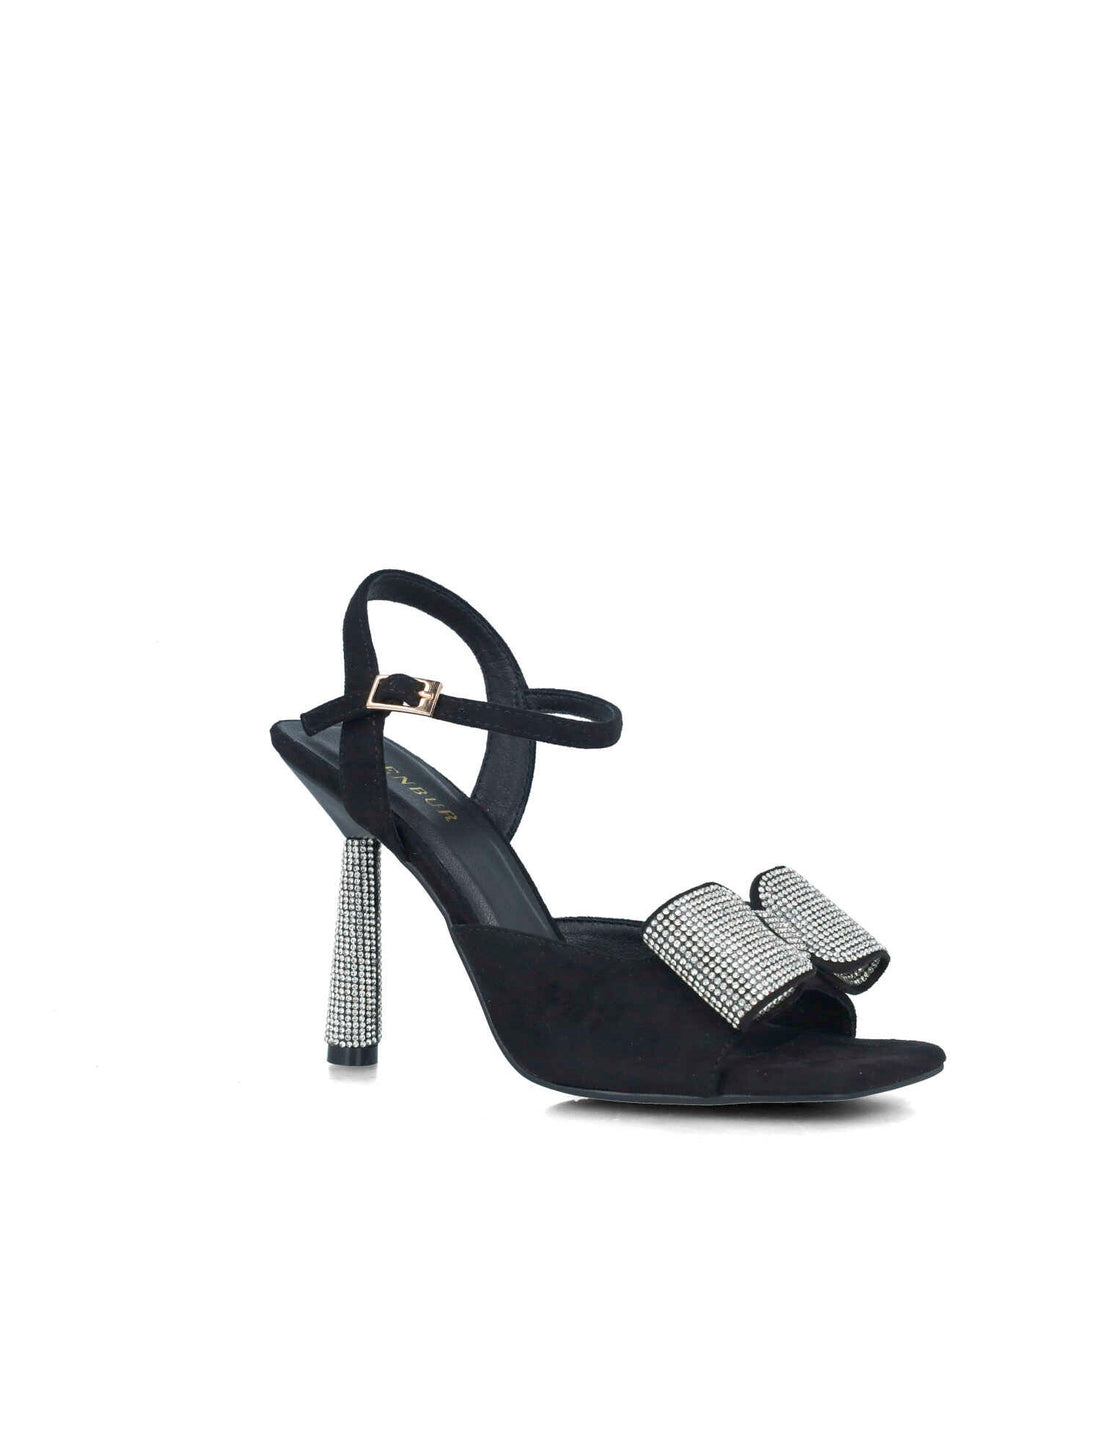 Black High-Heel Sandals With Embellished Bow_25442_01_02